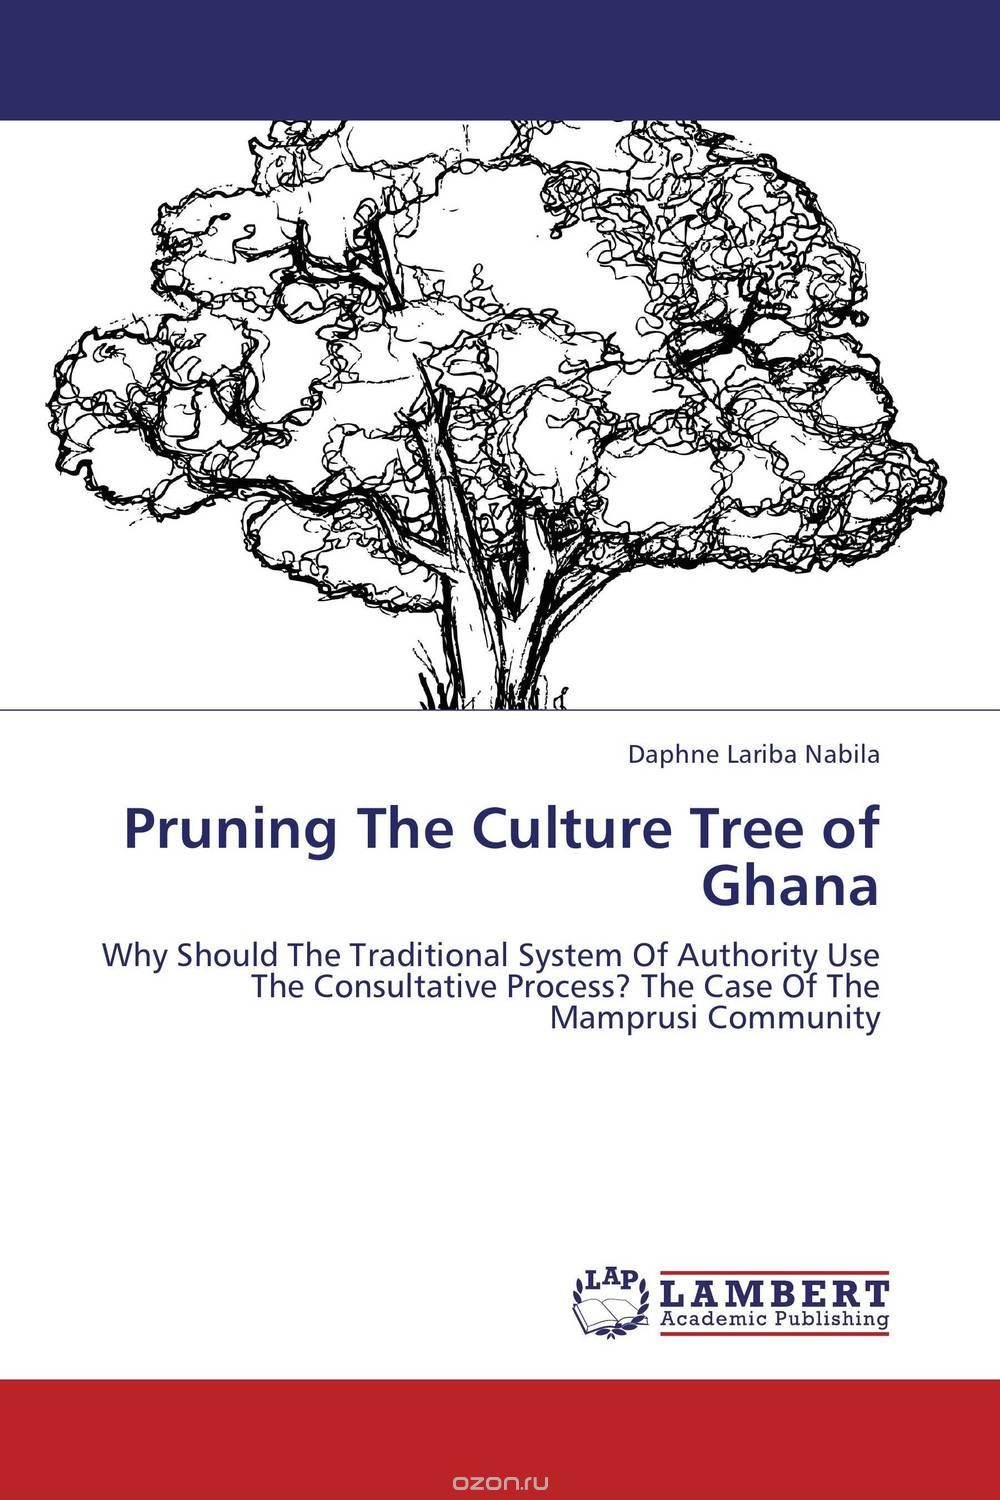 Скачать книгу "Pruning The Culture Tree of Ghana"